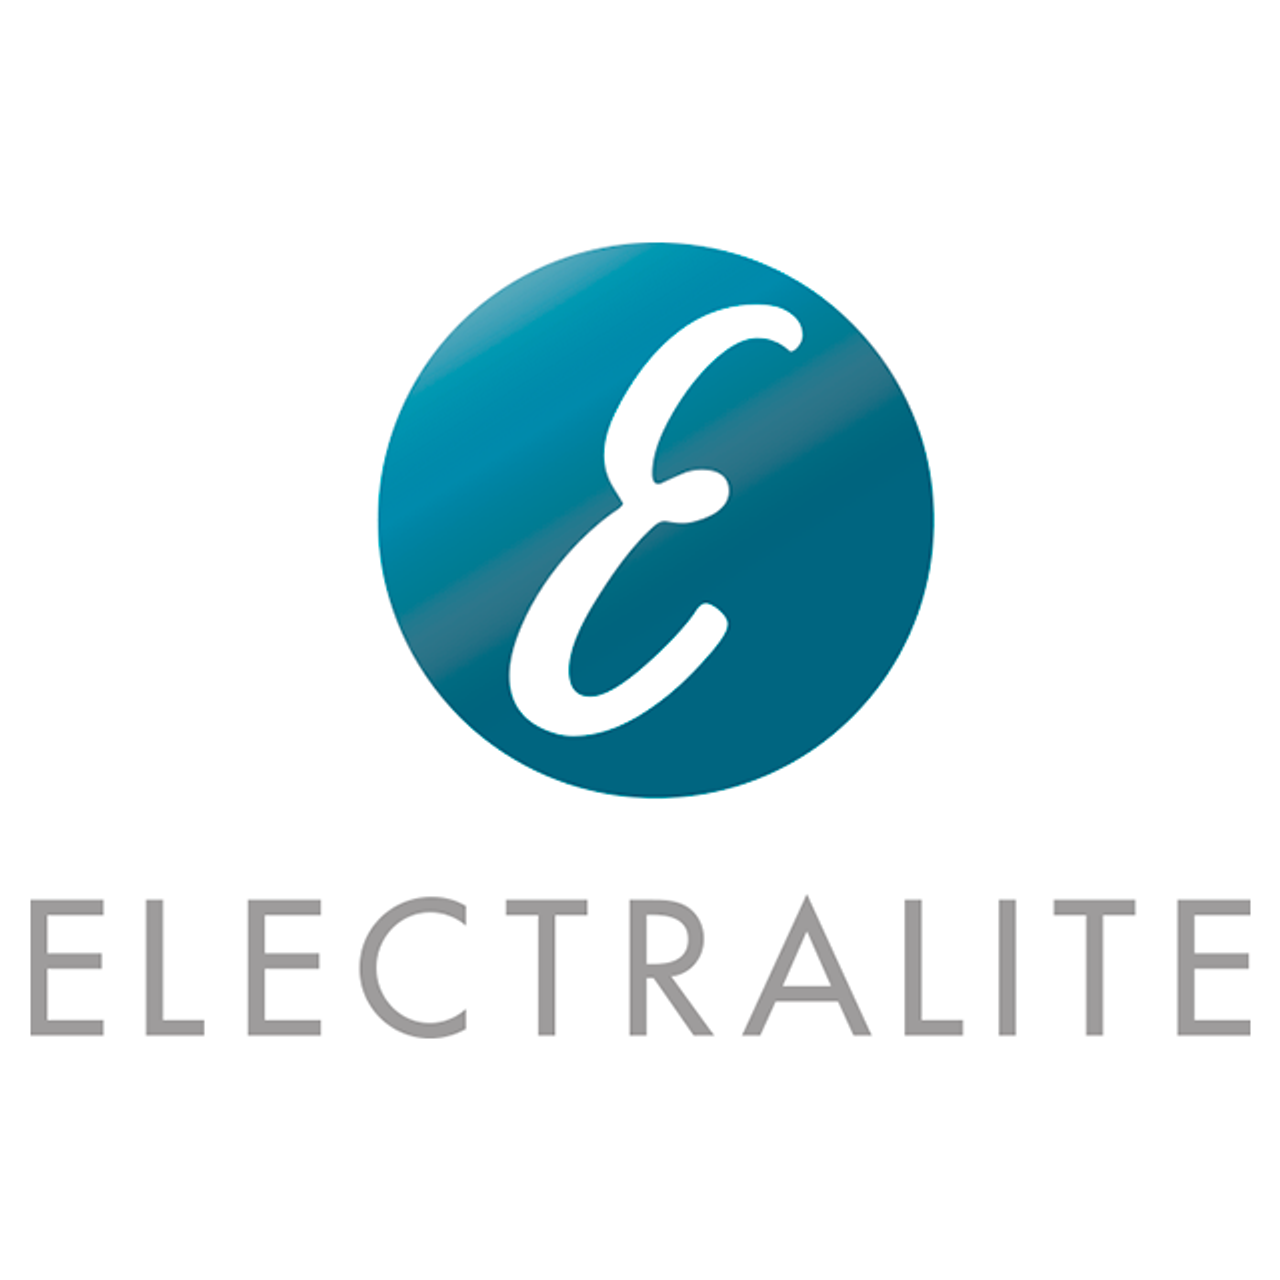 Electralite